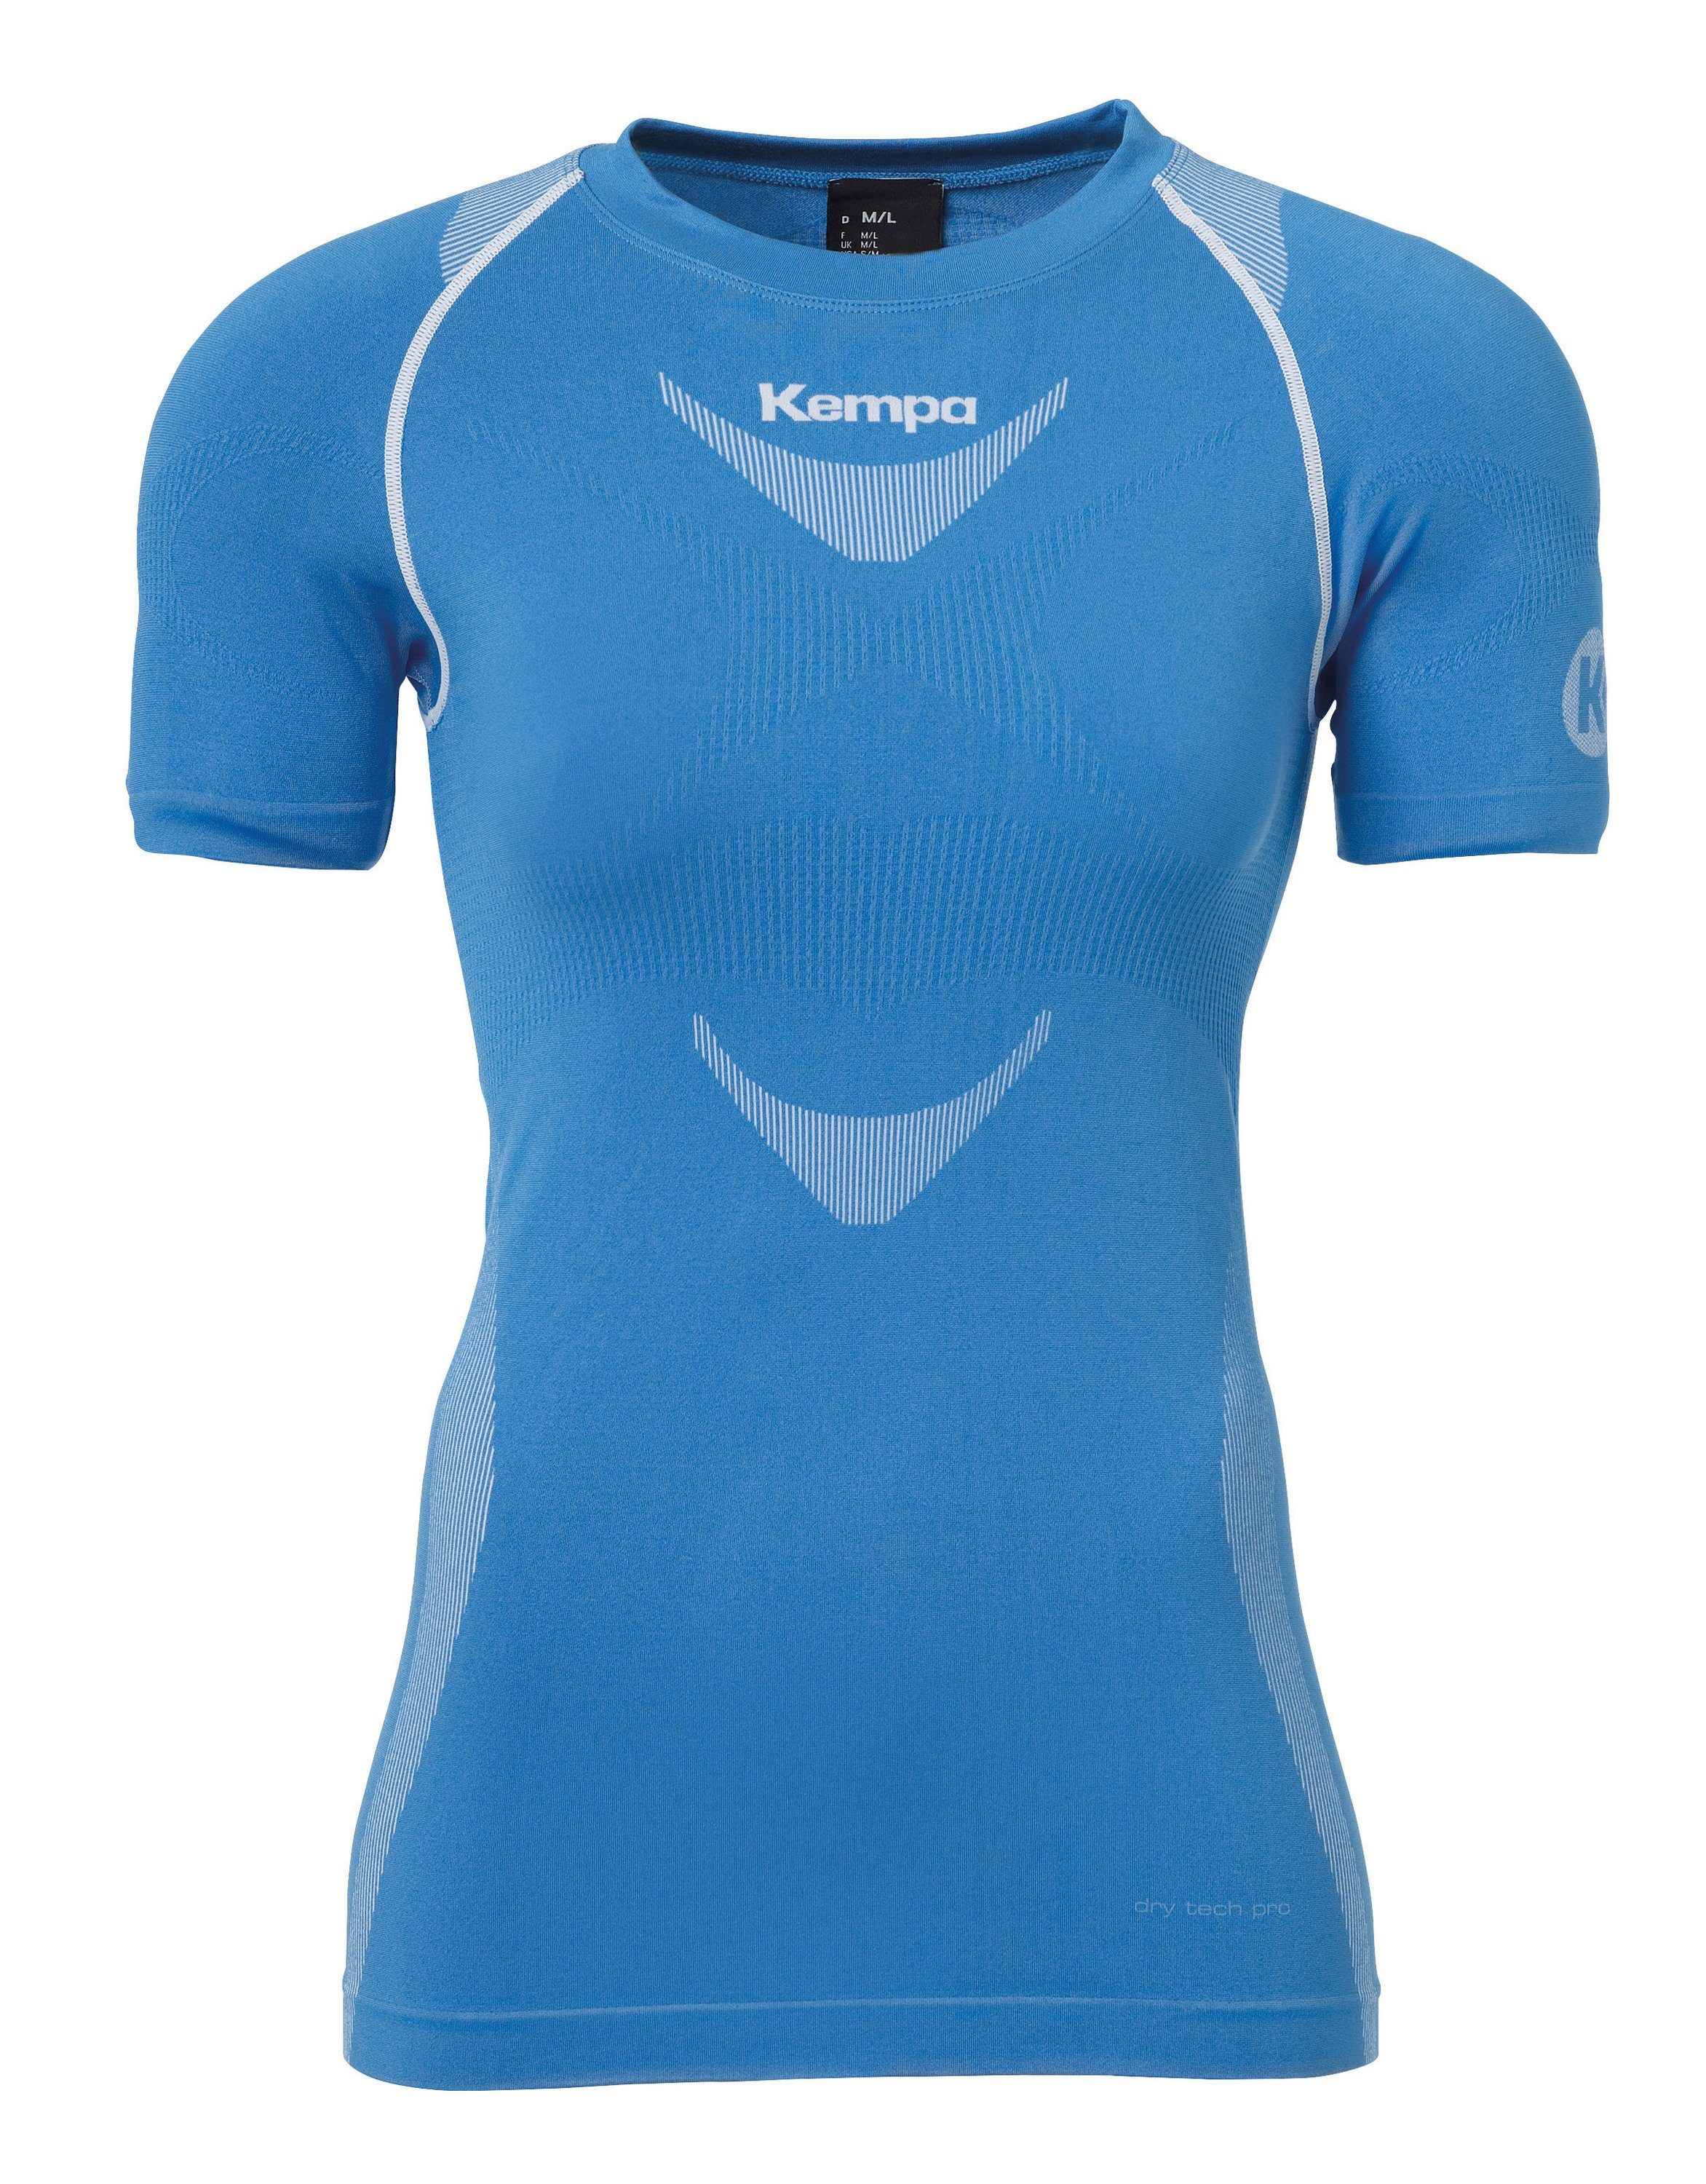 WOMEN atmungsaktiv, Shortsleeve PRO Kempa ATTITUDE Kempa kempablau/weiß Trainingsshirt schnelltrocknend